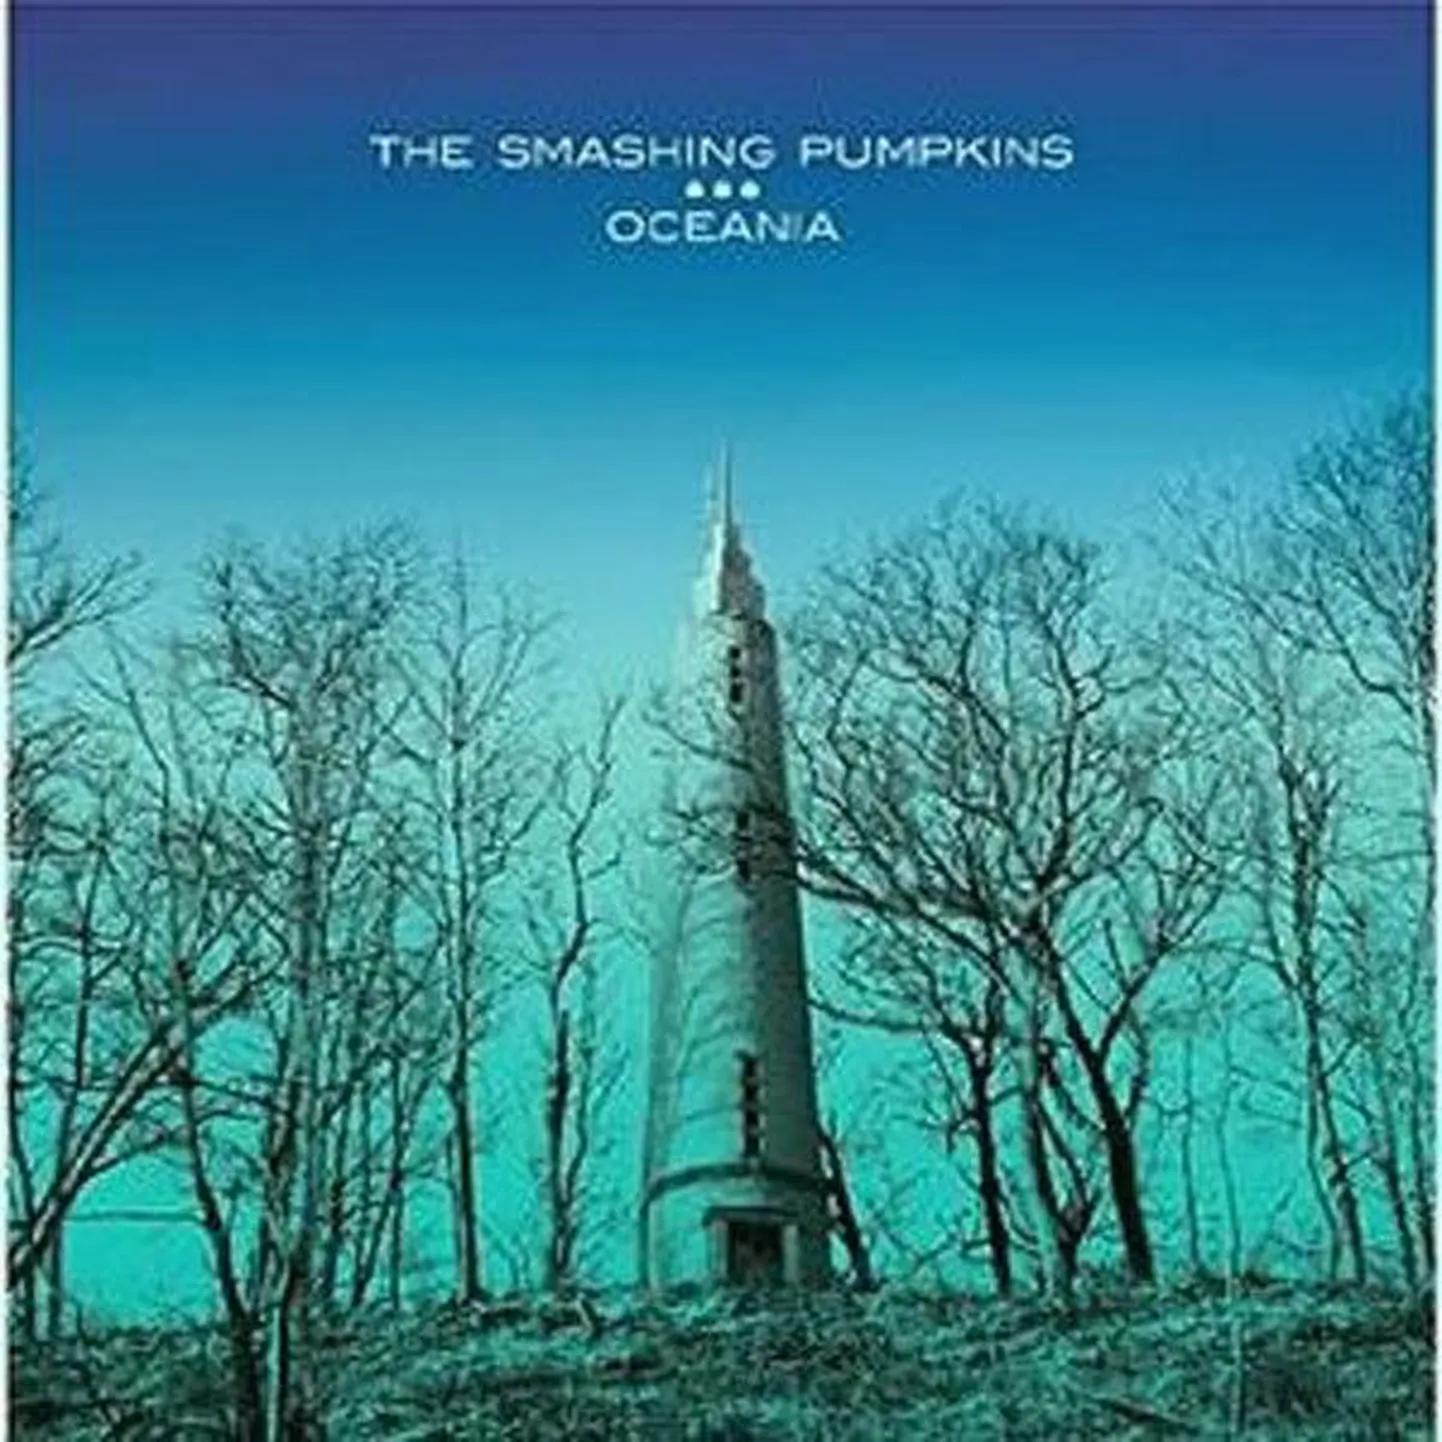 The Smashing Pumpkins
Oceania (Martha’s Music)